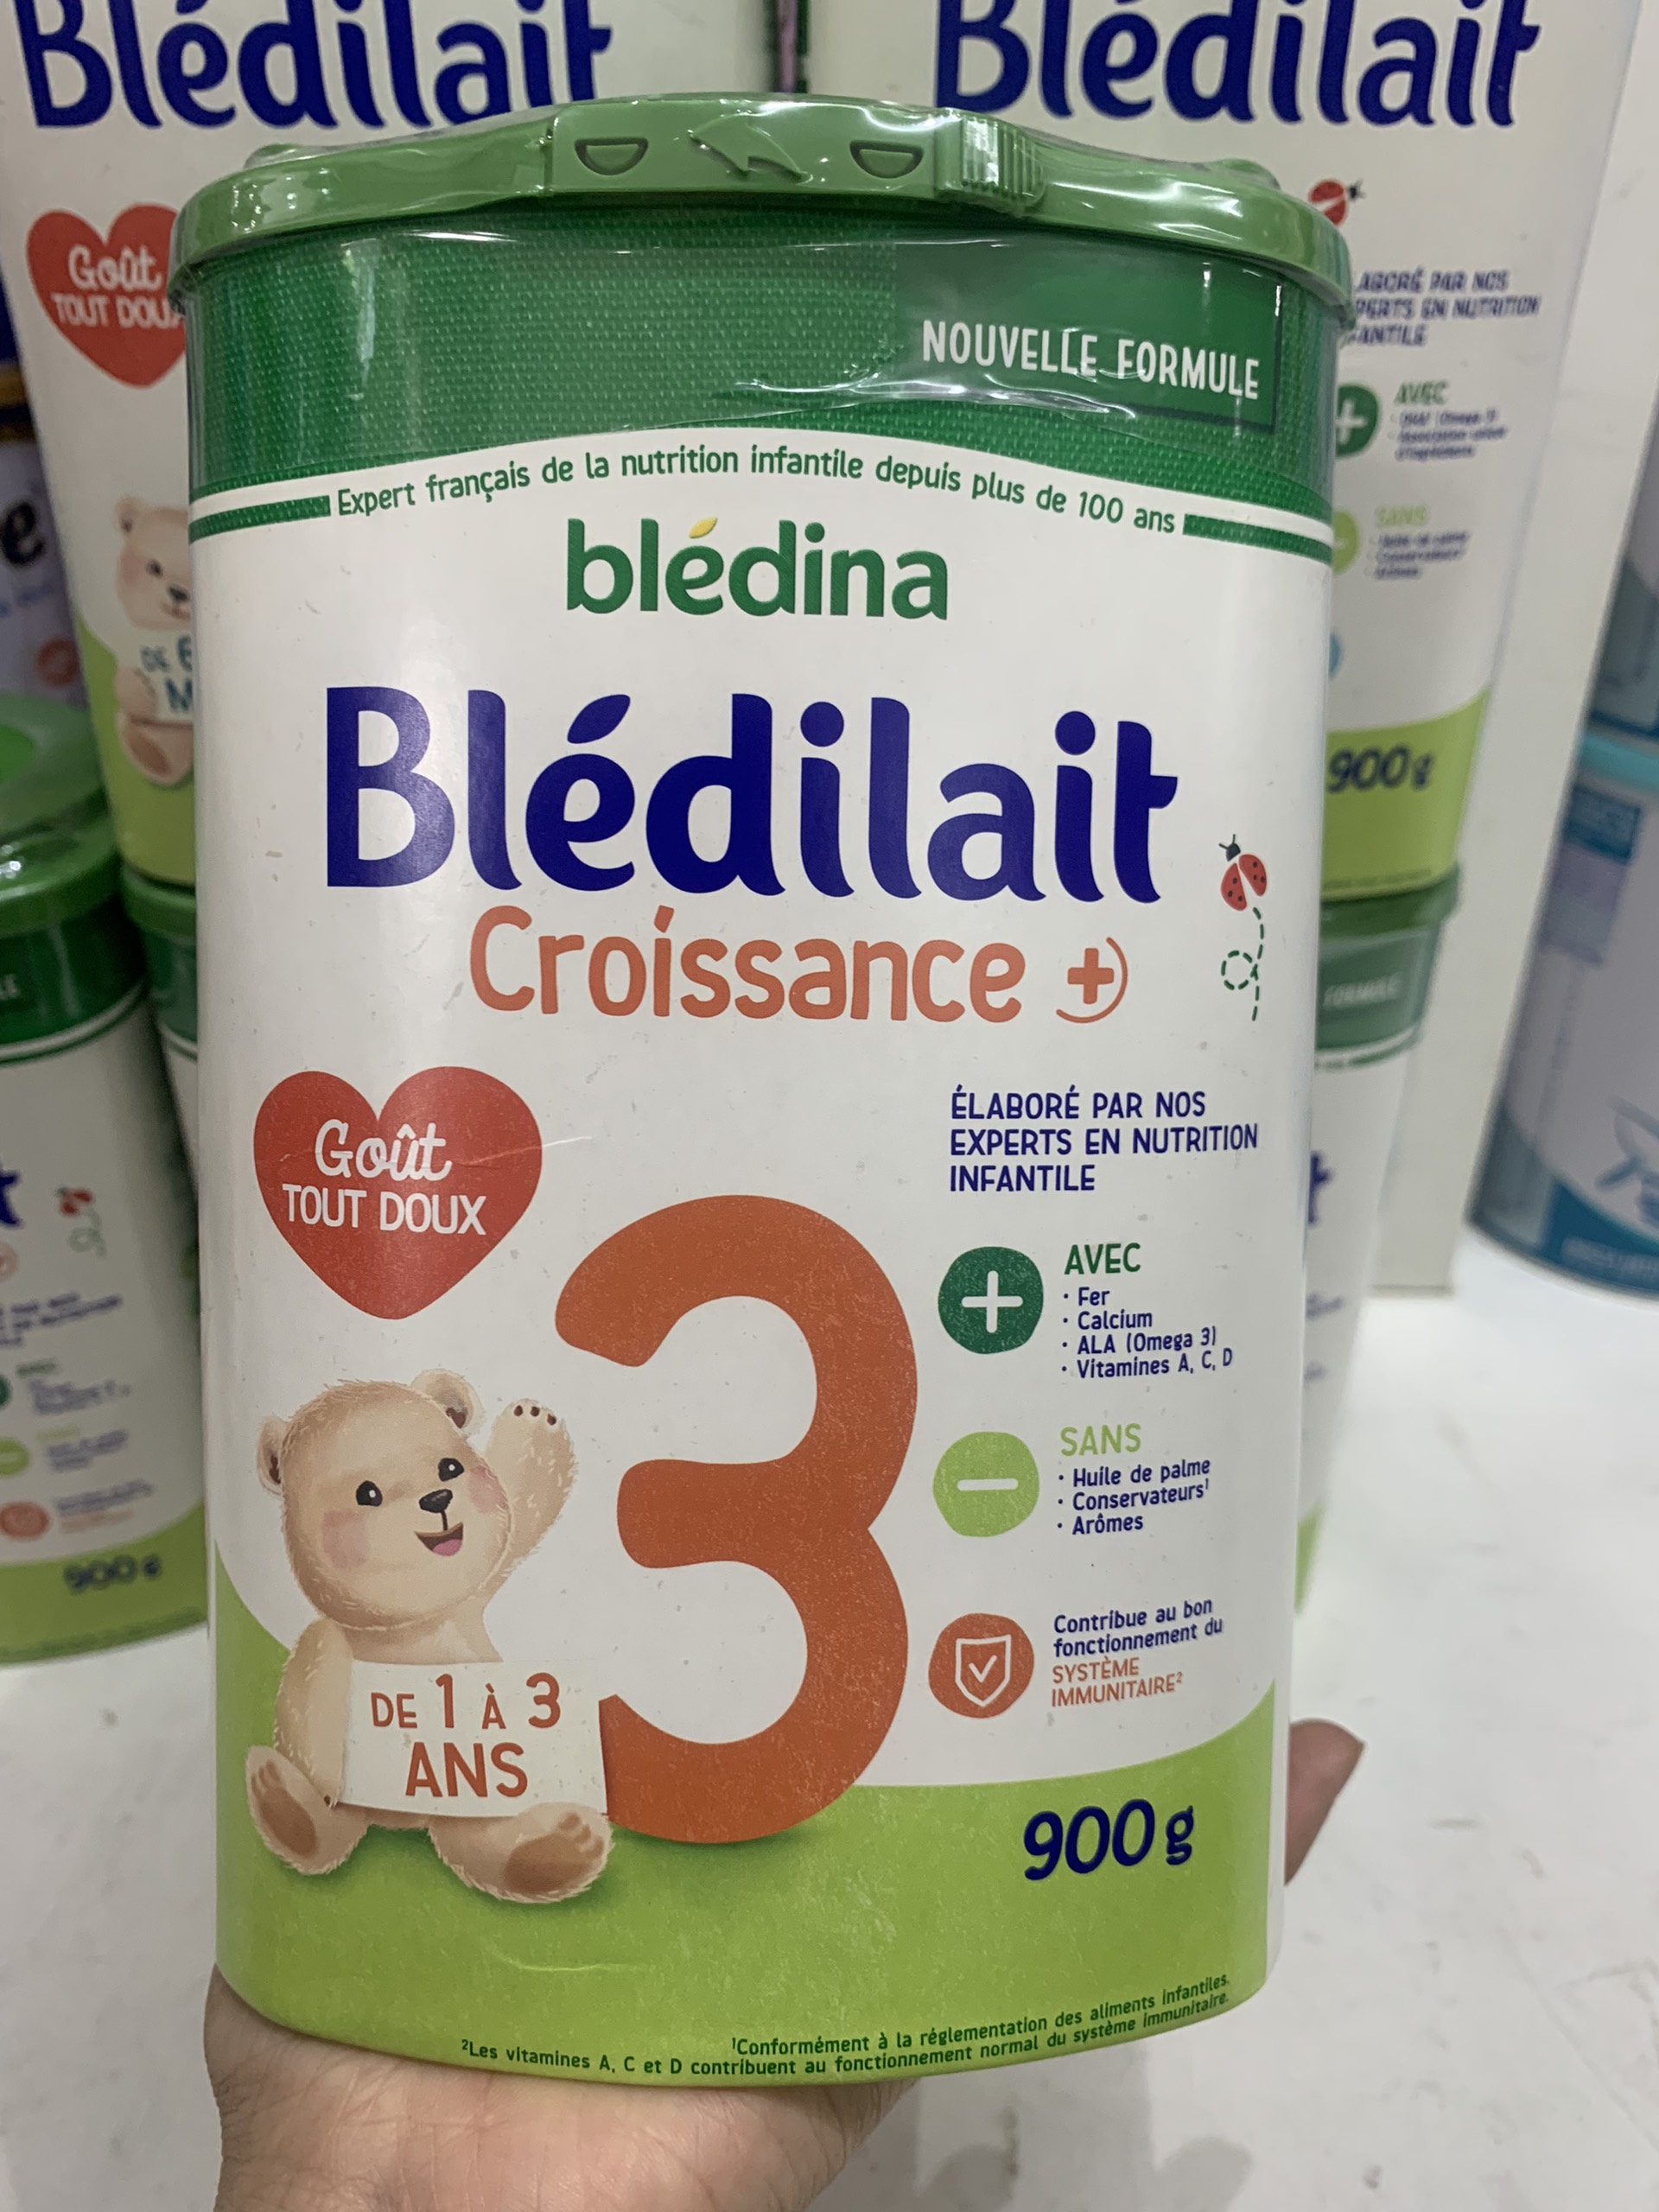 Sữa bột Bledilait Bledina Pháp số 3 cho bé từ 1 - 3 tuổi hộp 900g